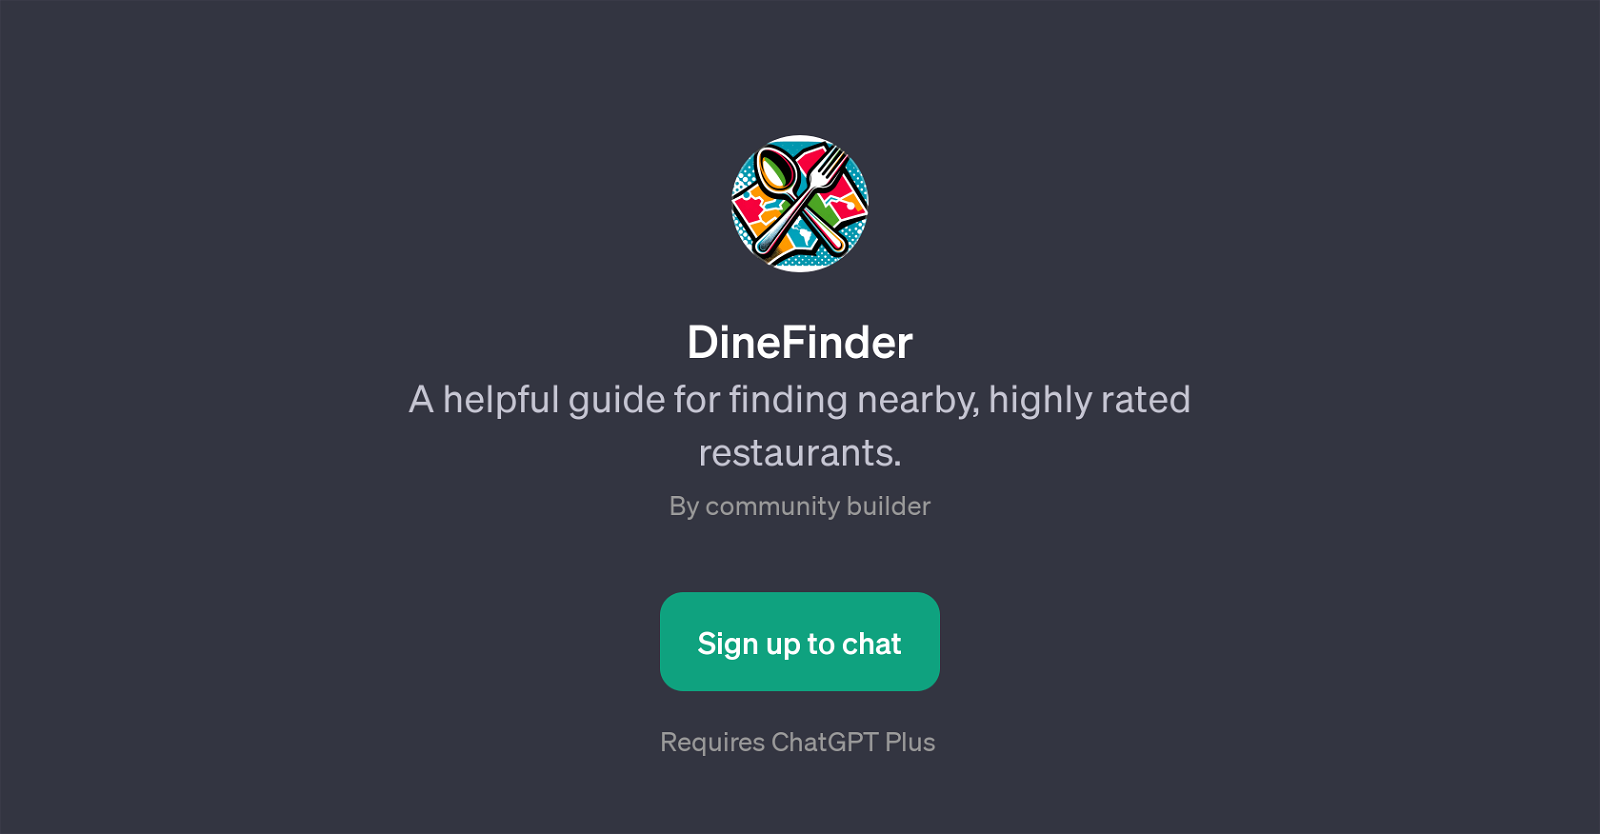 DineFinder website